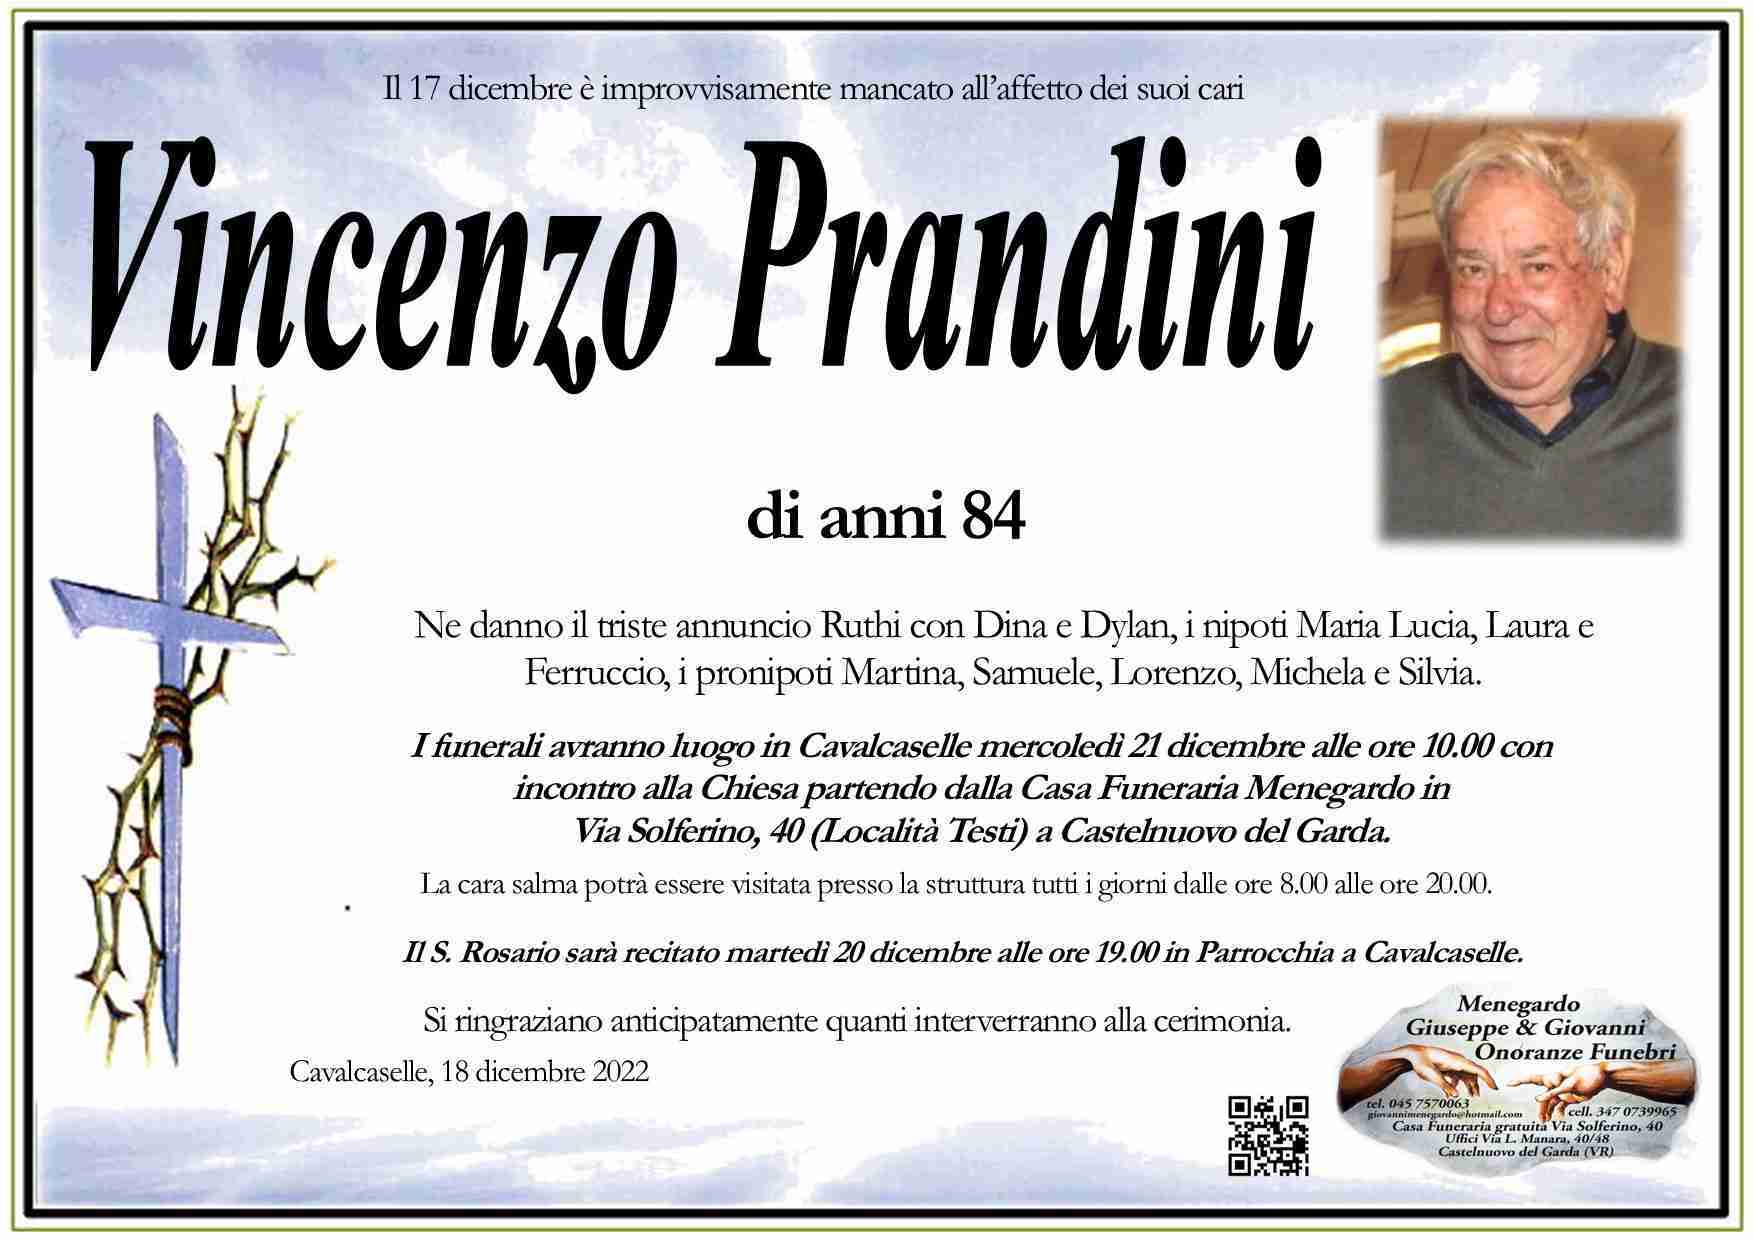 Vincenzo Prandini